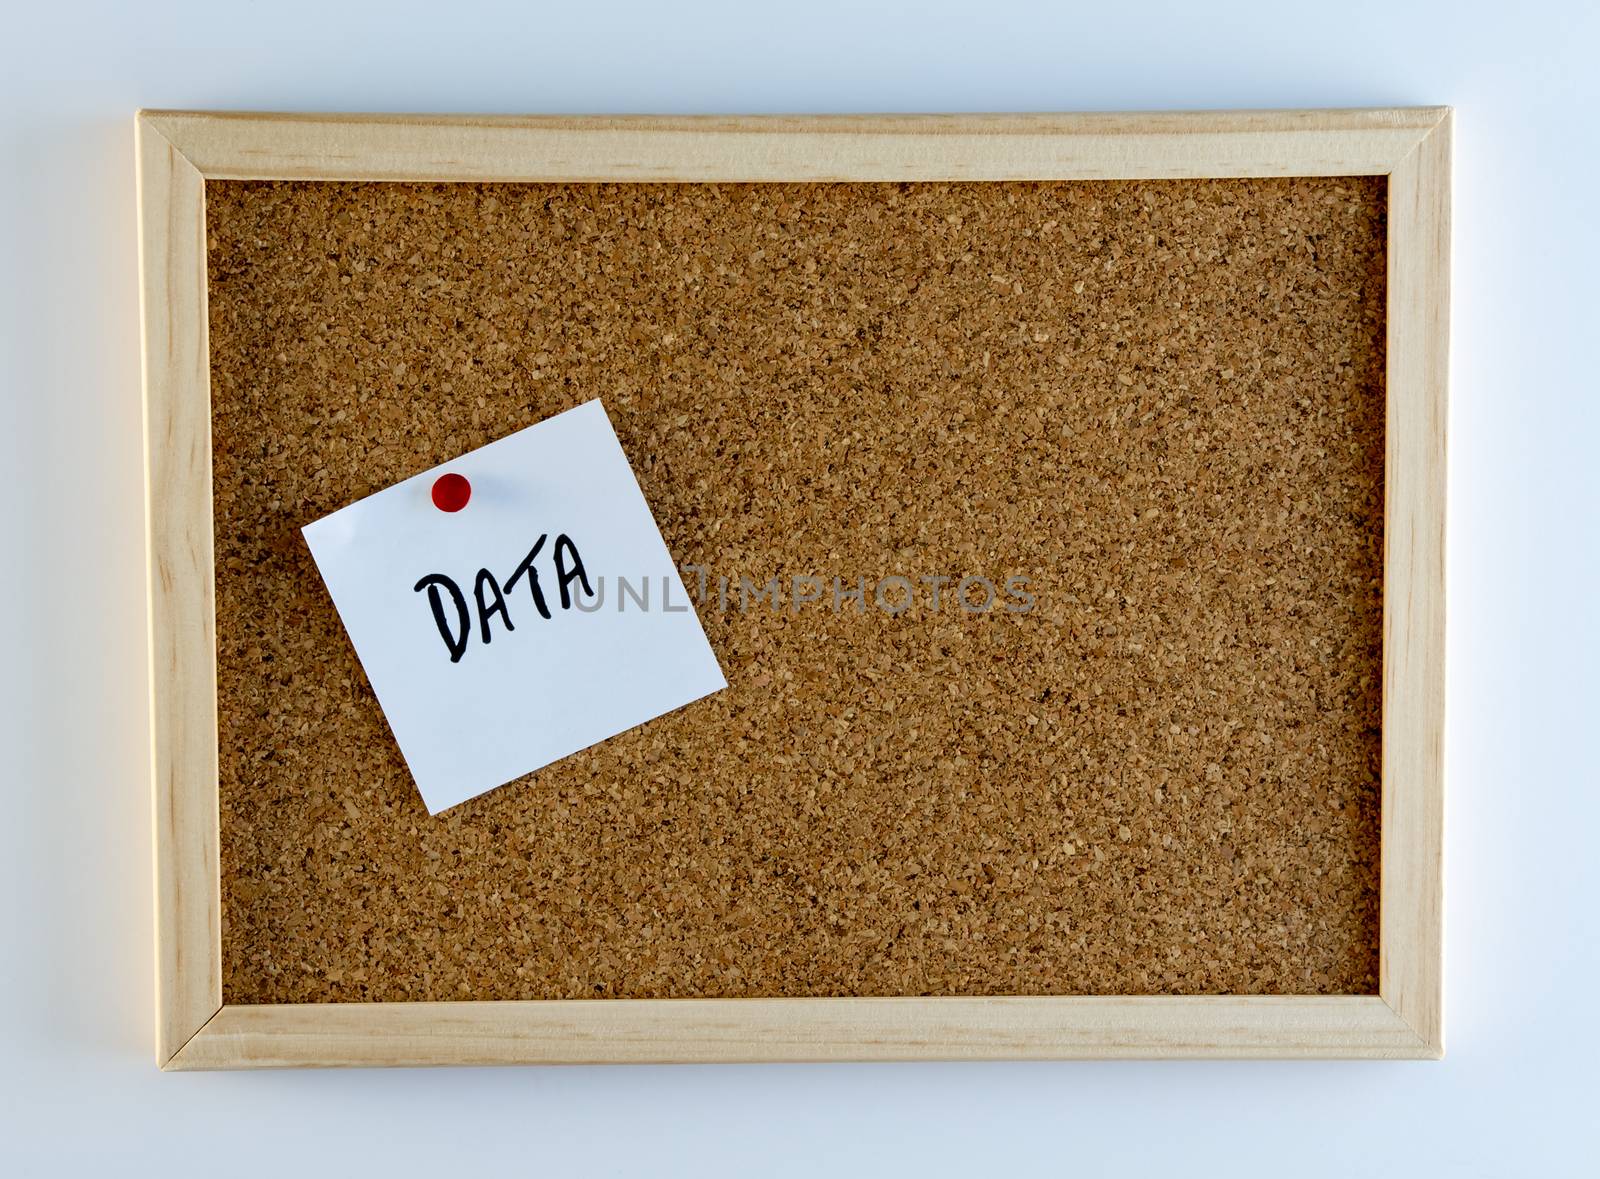 The word, "Data" pinned on cork bulletin board